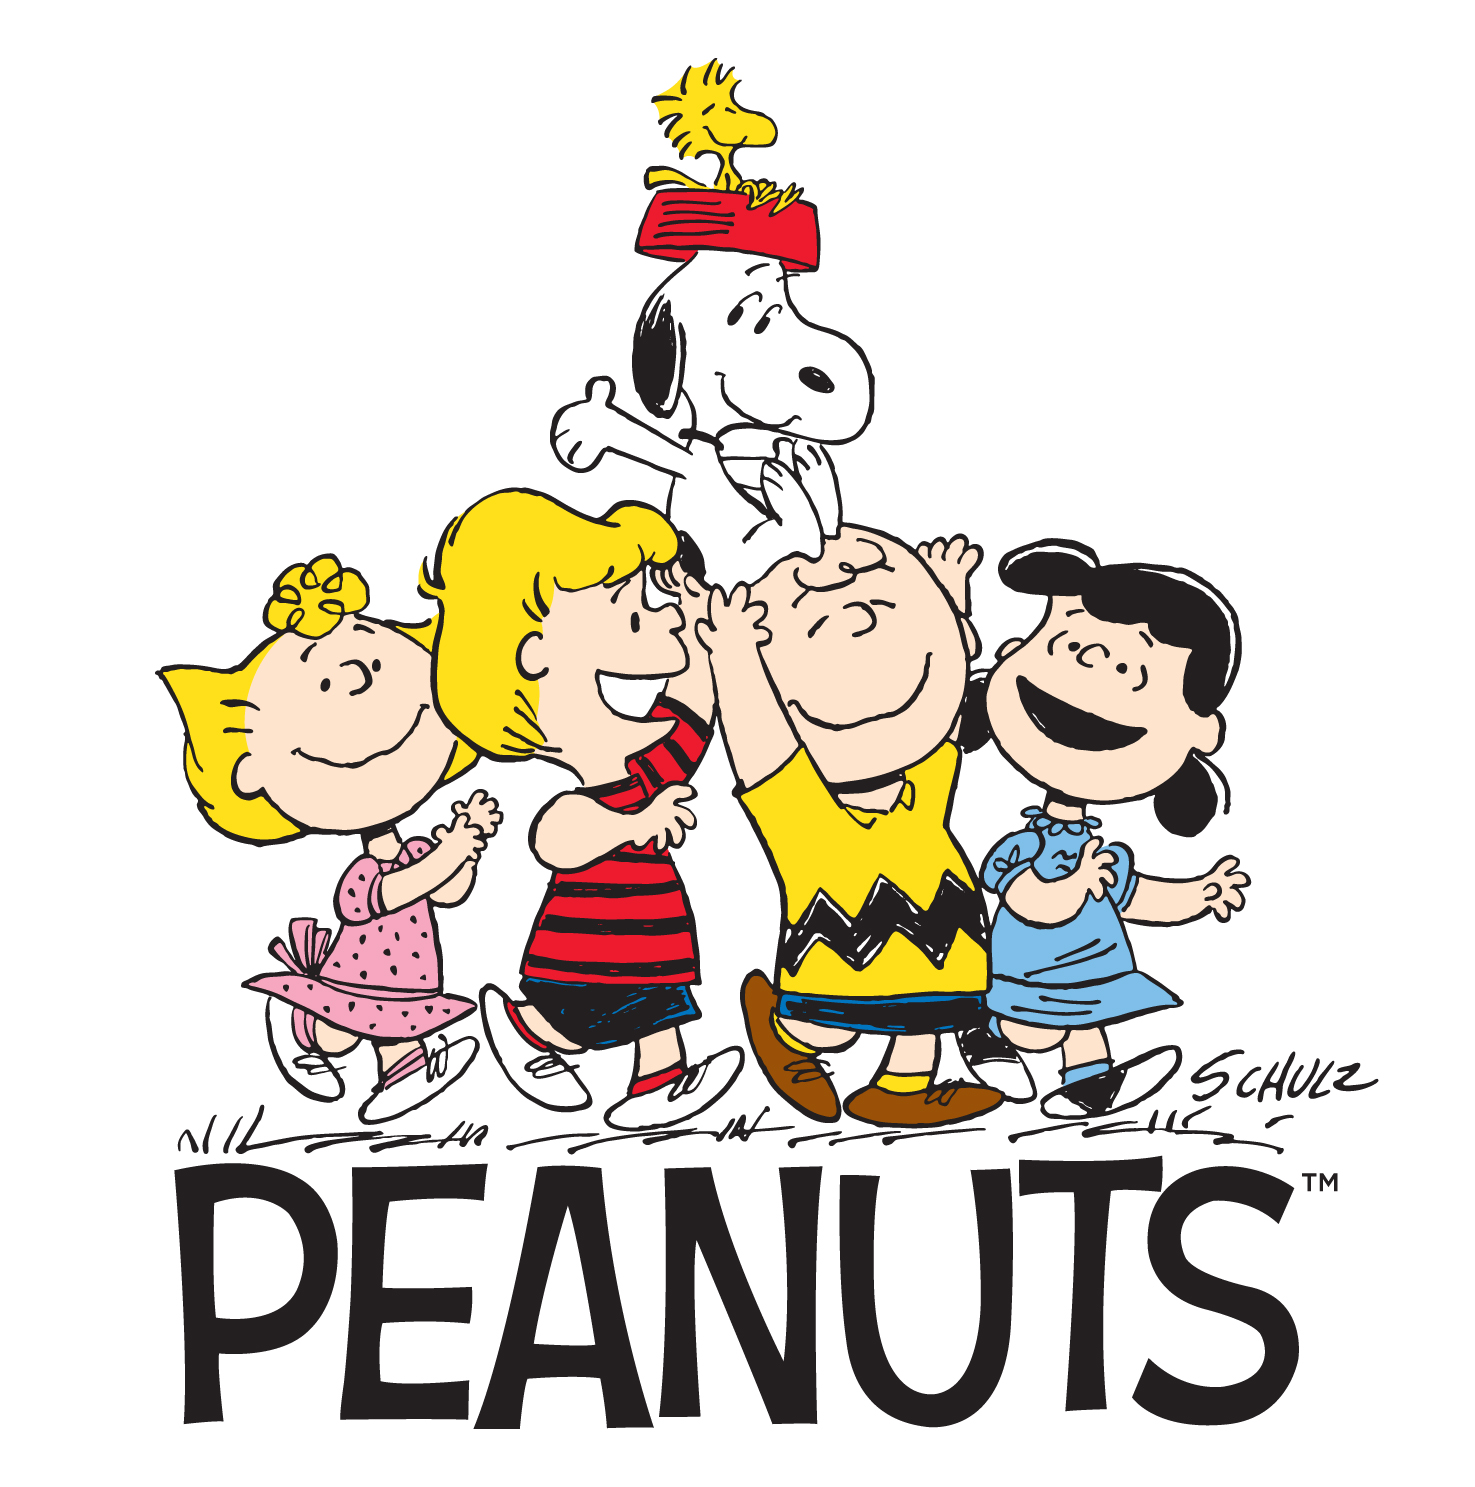 peanuts-group.jpg